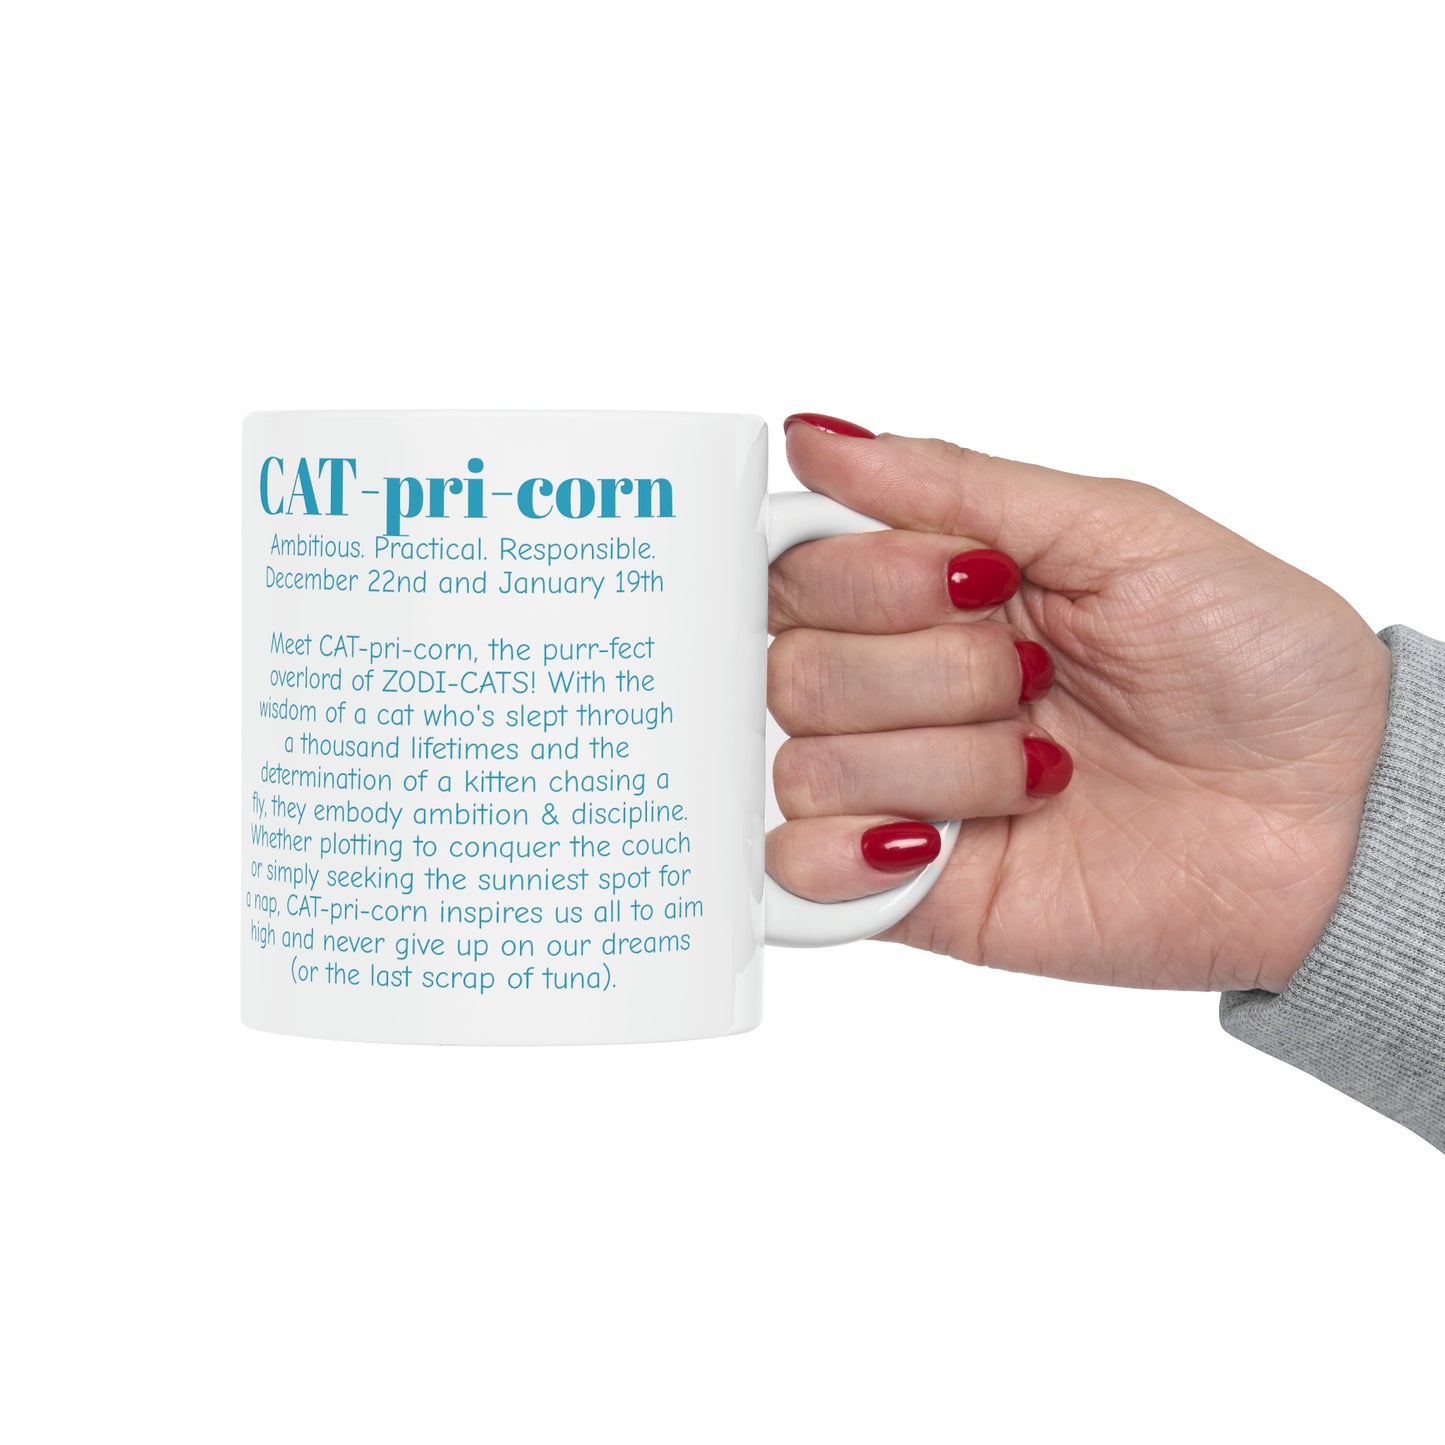 CAT-pri-corn the Capricorn CAT MUG - WHITE 11oz